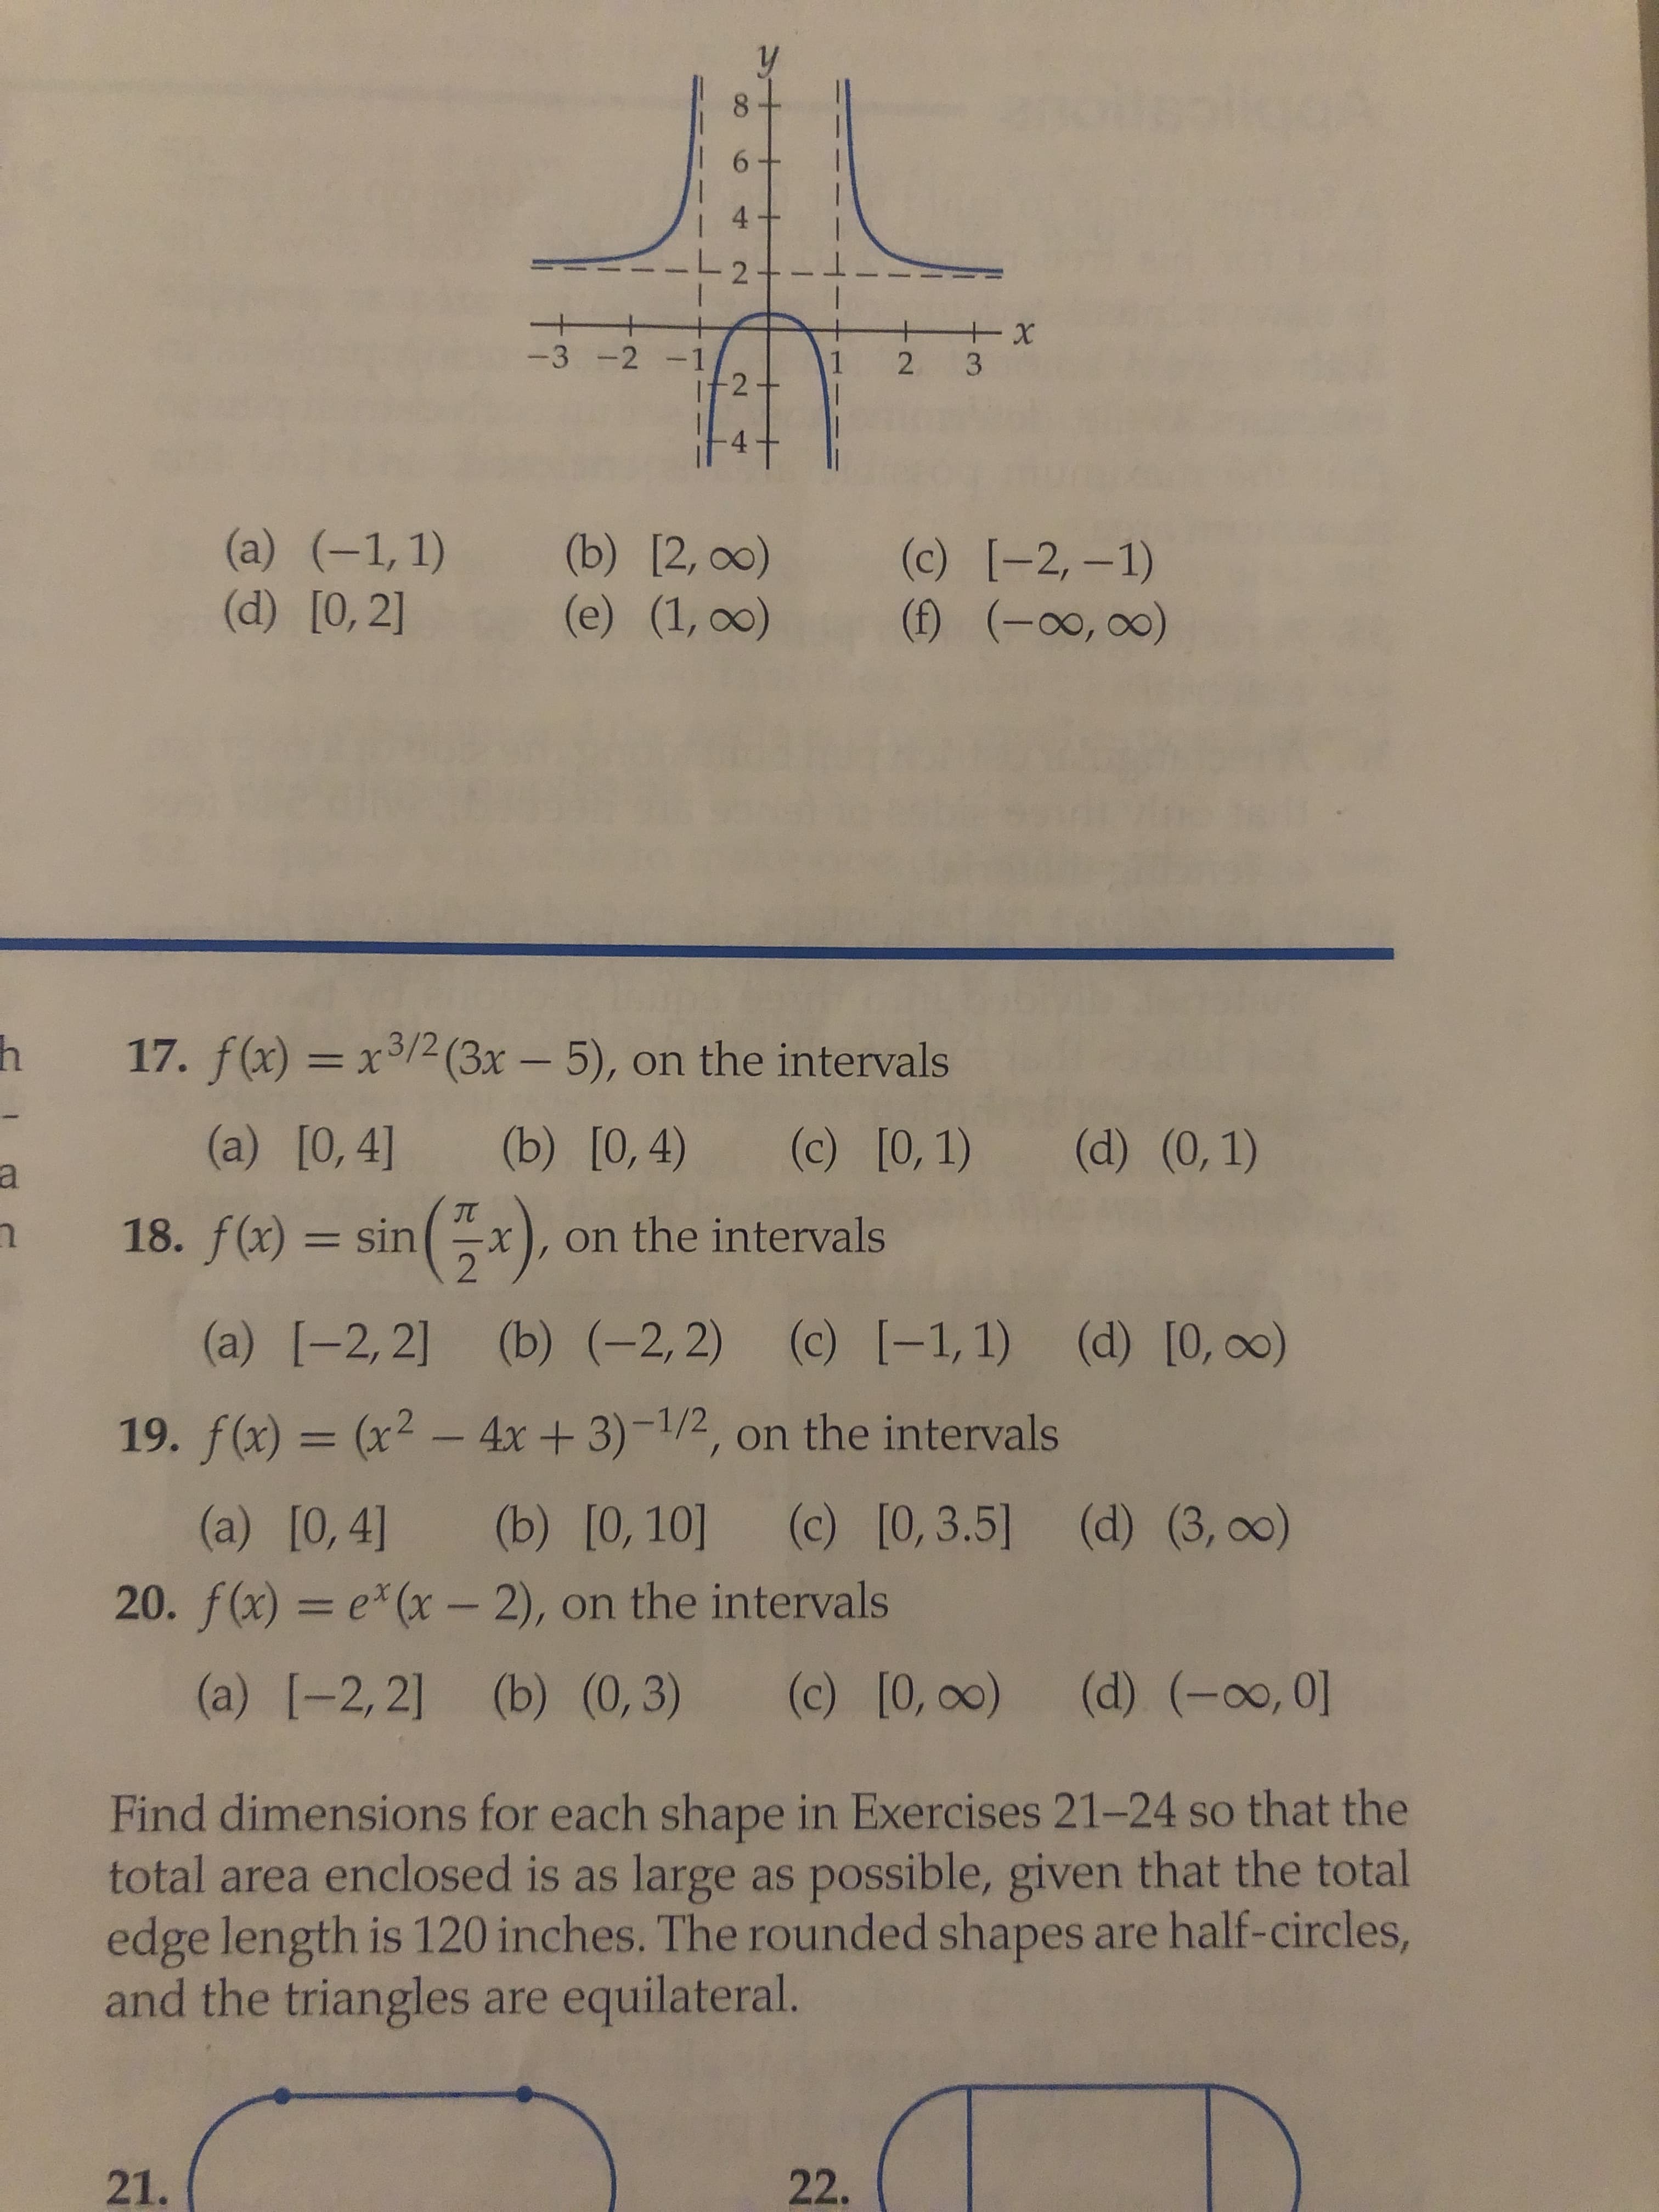 20. f(x) = e*(x- 2), on the intervals
(a) [-2, 2] (b) (0,3)
(c) [0, 00)
(d) (-0o, 0]
